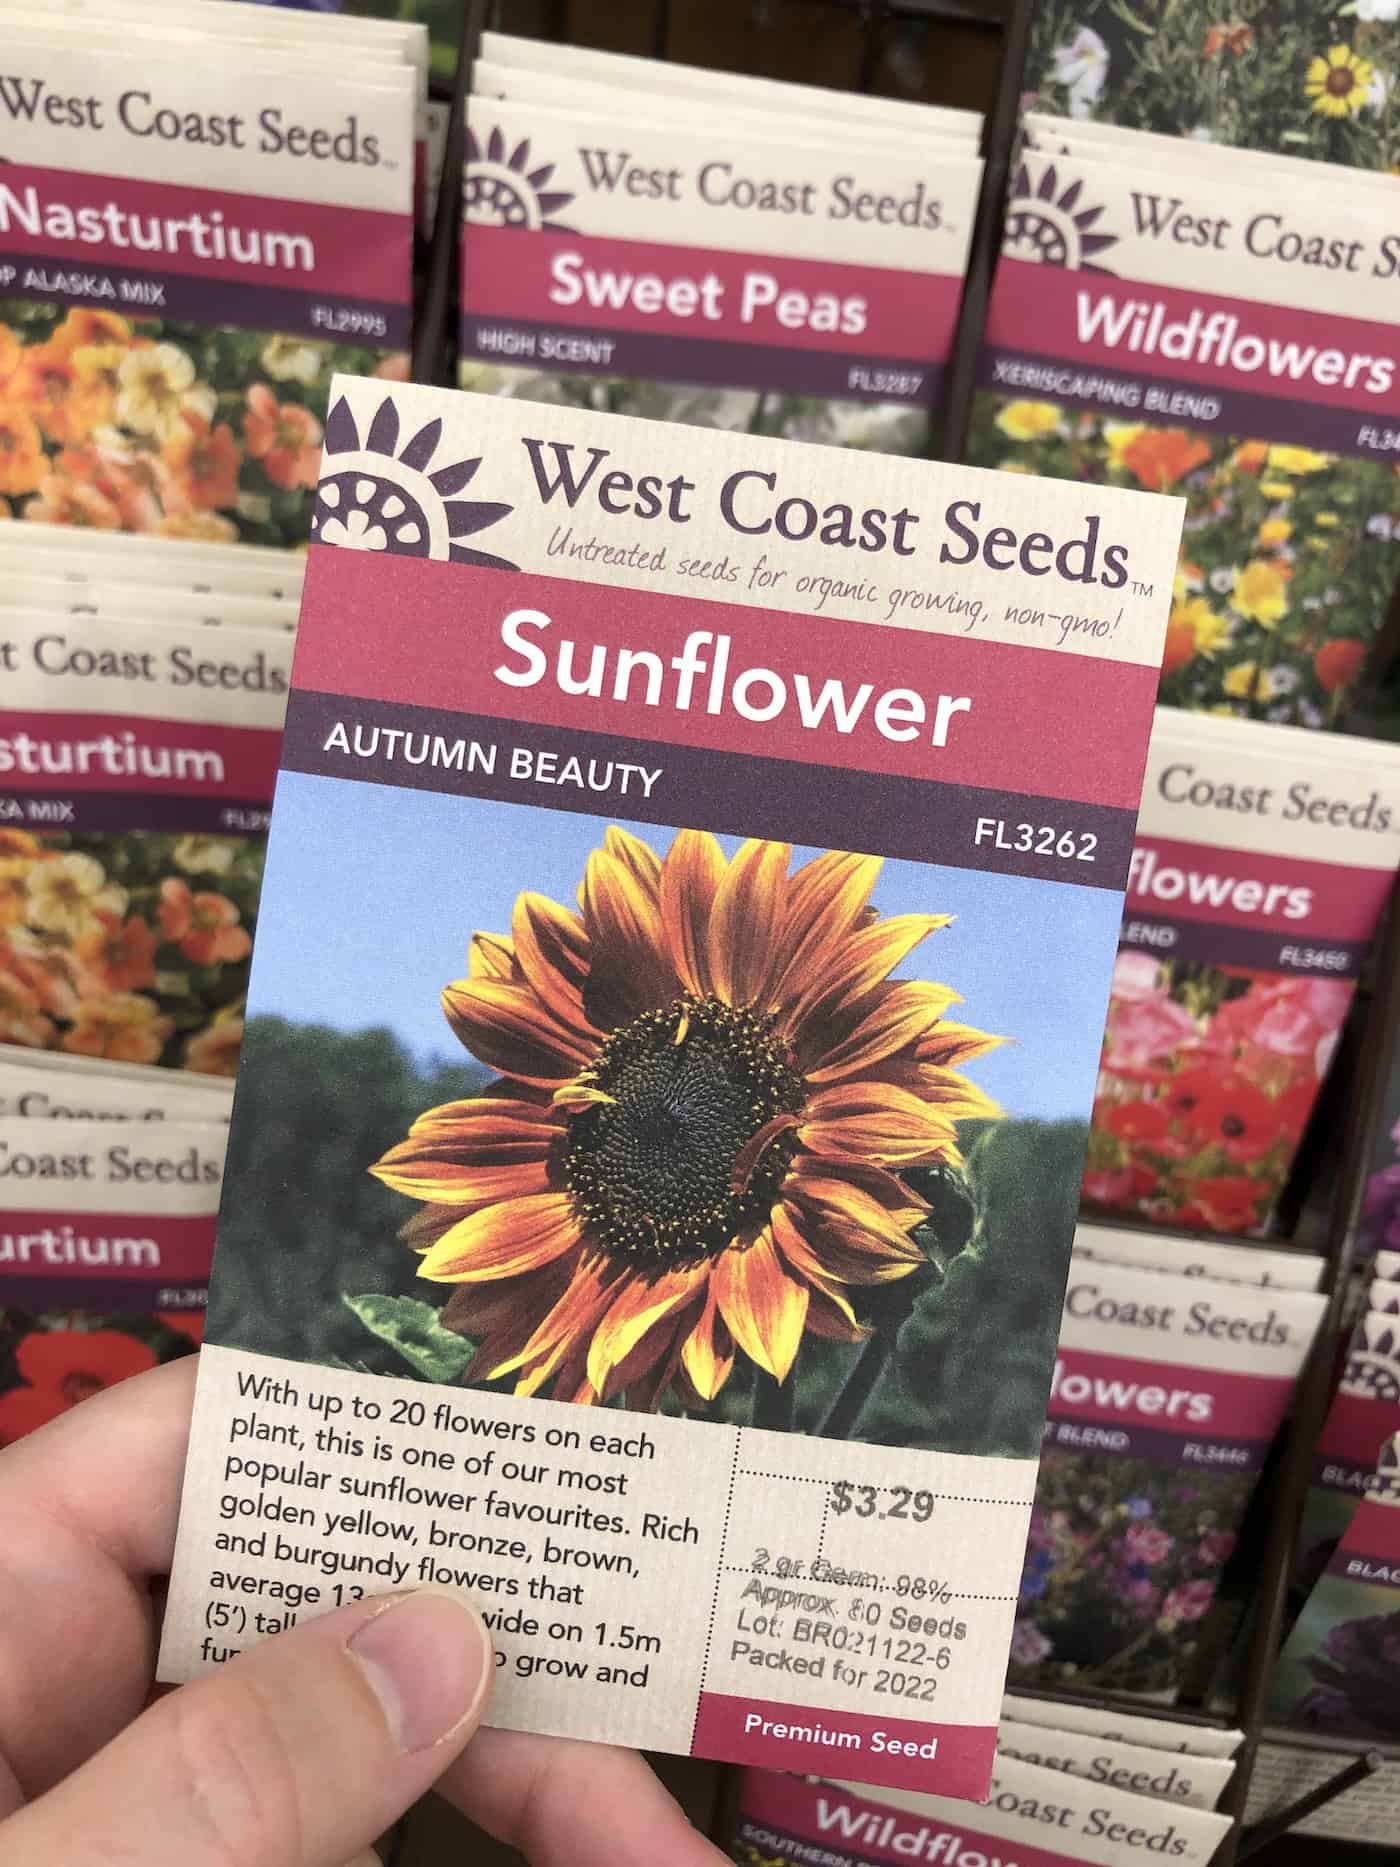 Sunflower seeds - autumn beauty